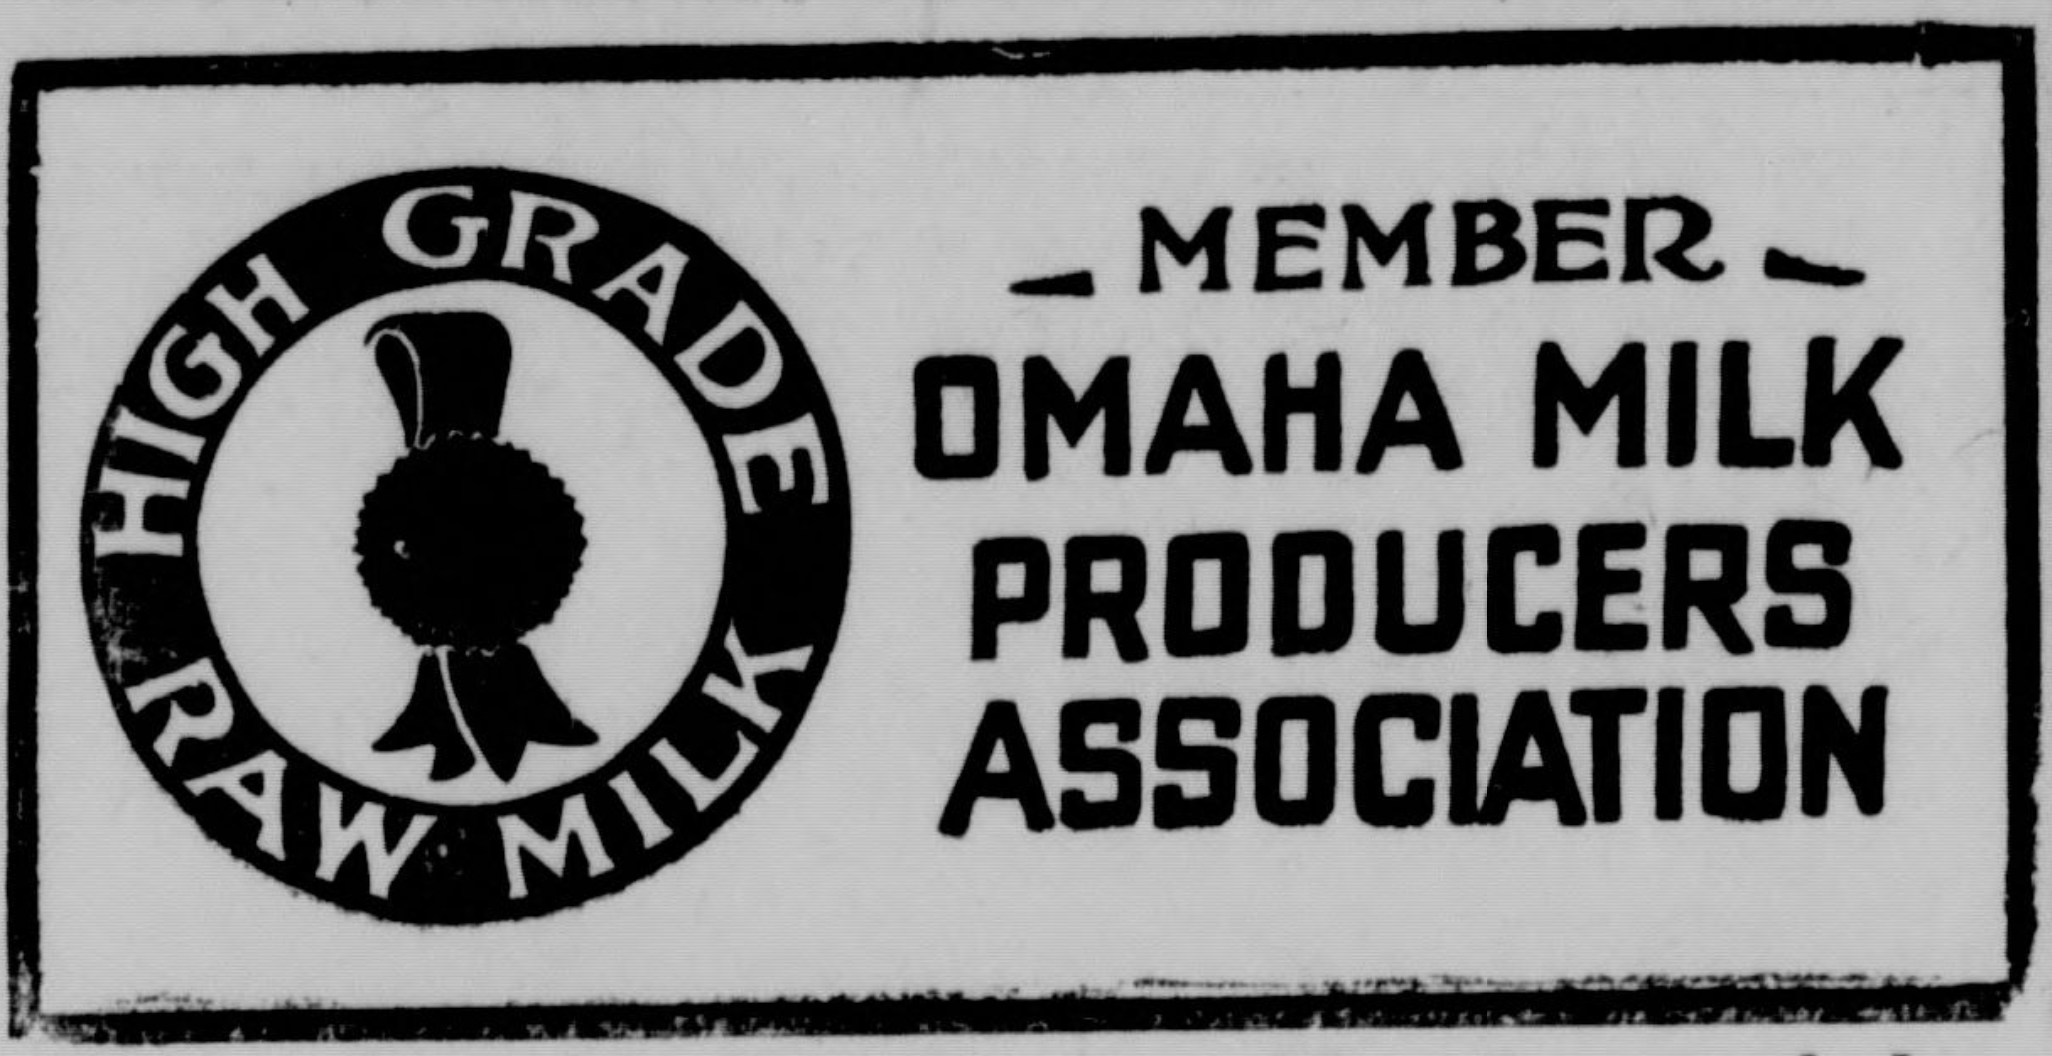 Chris Spanggaard's dairy was a longtime member of the Omaha Milk Producers Association.